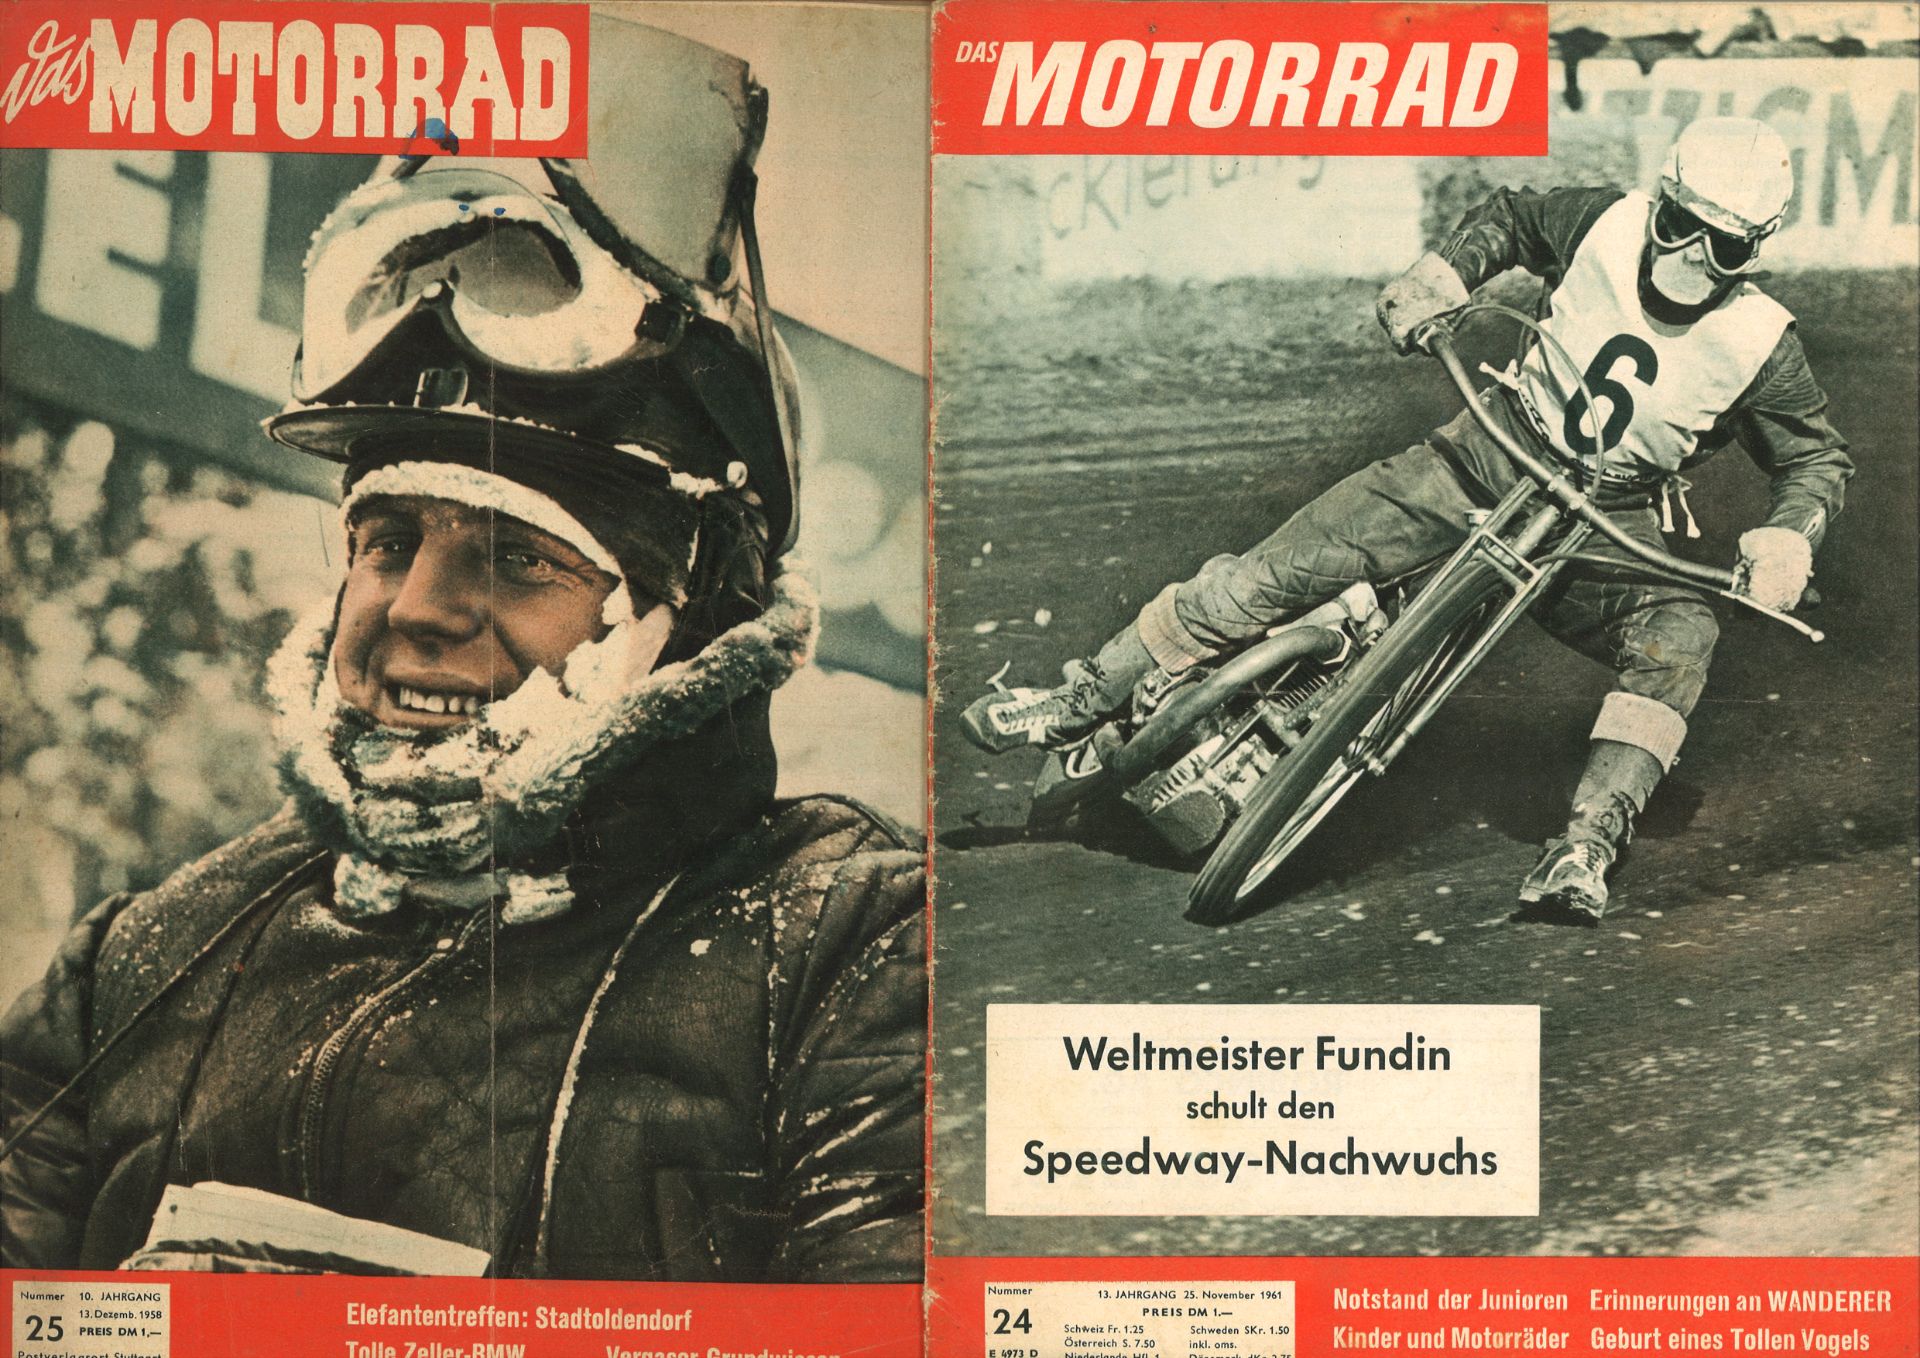 Das Motorrad, Magazin, hier 10. Jahrgang, 1958, Nr. 25 und 26, 13. Jahrgang 1961 Nr. 24 und 47, - Image 2 of 4